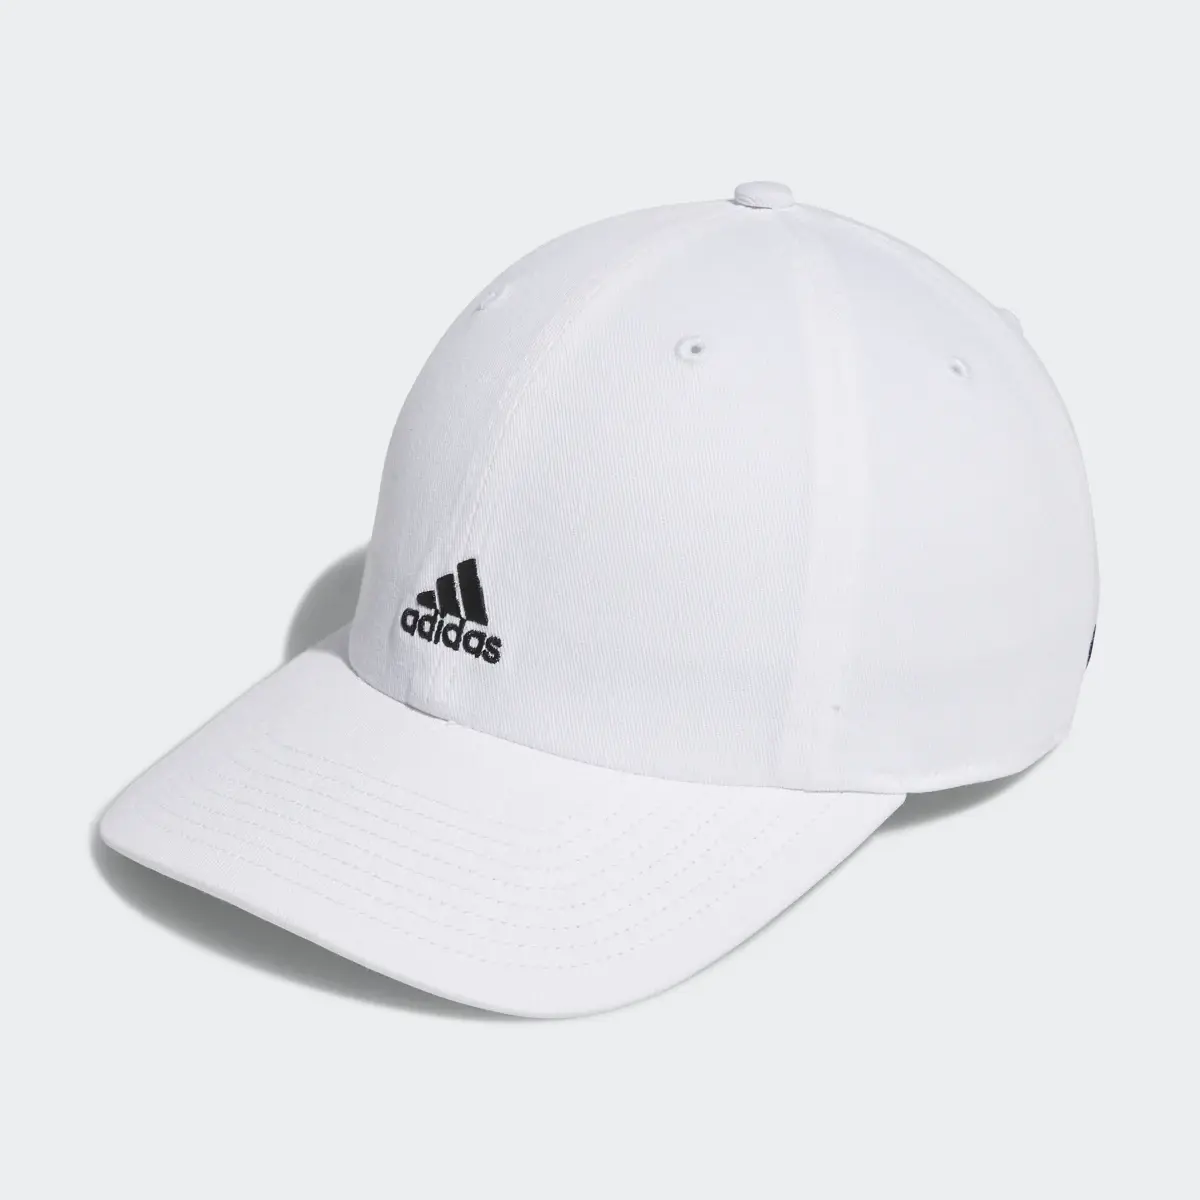 Adidas Saturday Hat. 2